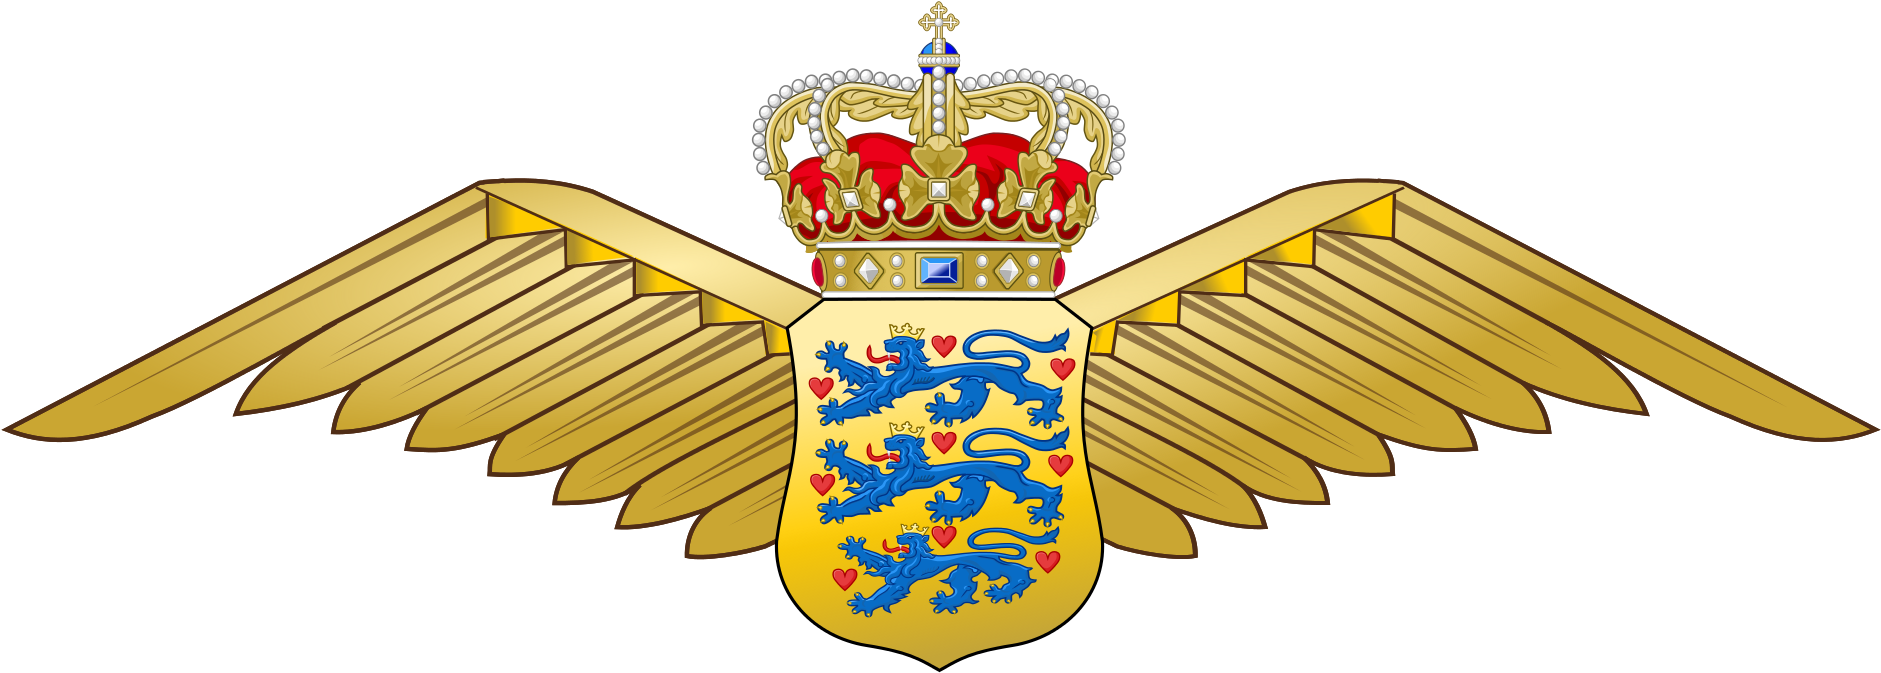 Royal Danish Air Force Military Wing Royal Netherlands - Royal Danish Air Force Military Wing Royal Netherlands (1920x780)